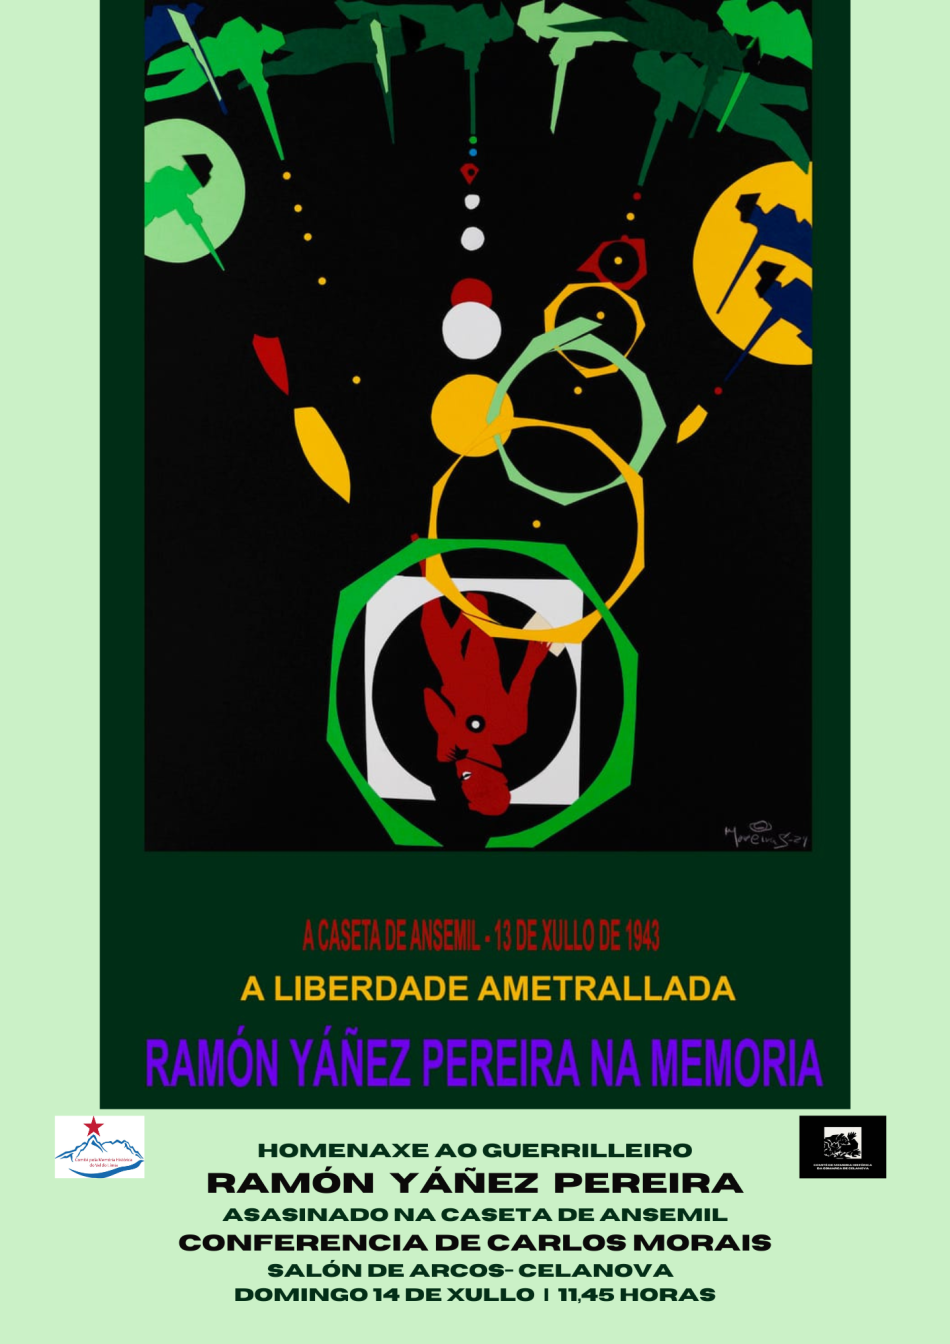 Homenaje al guerrillero monfortino Ramón Yáñez Pereira en Celanova el domingo 14